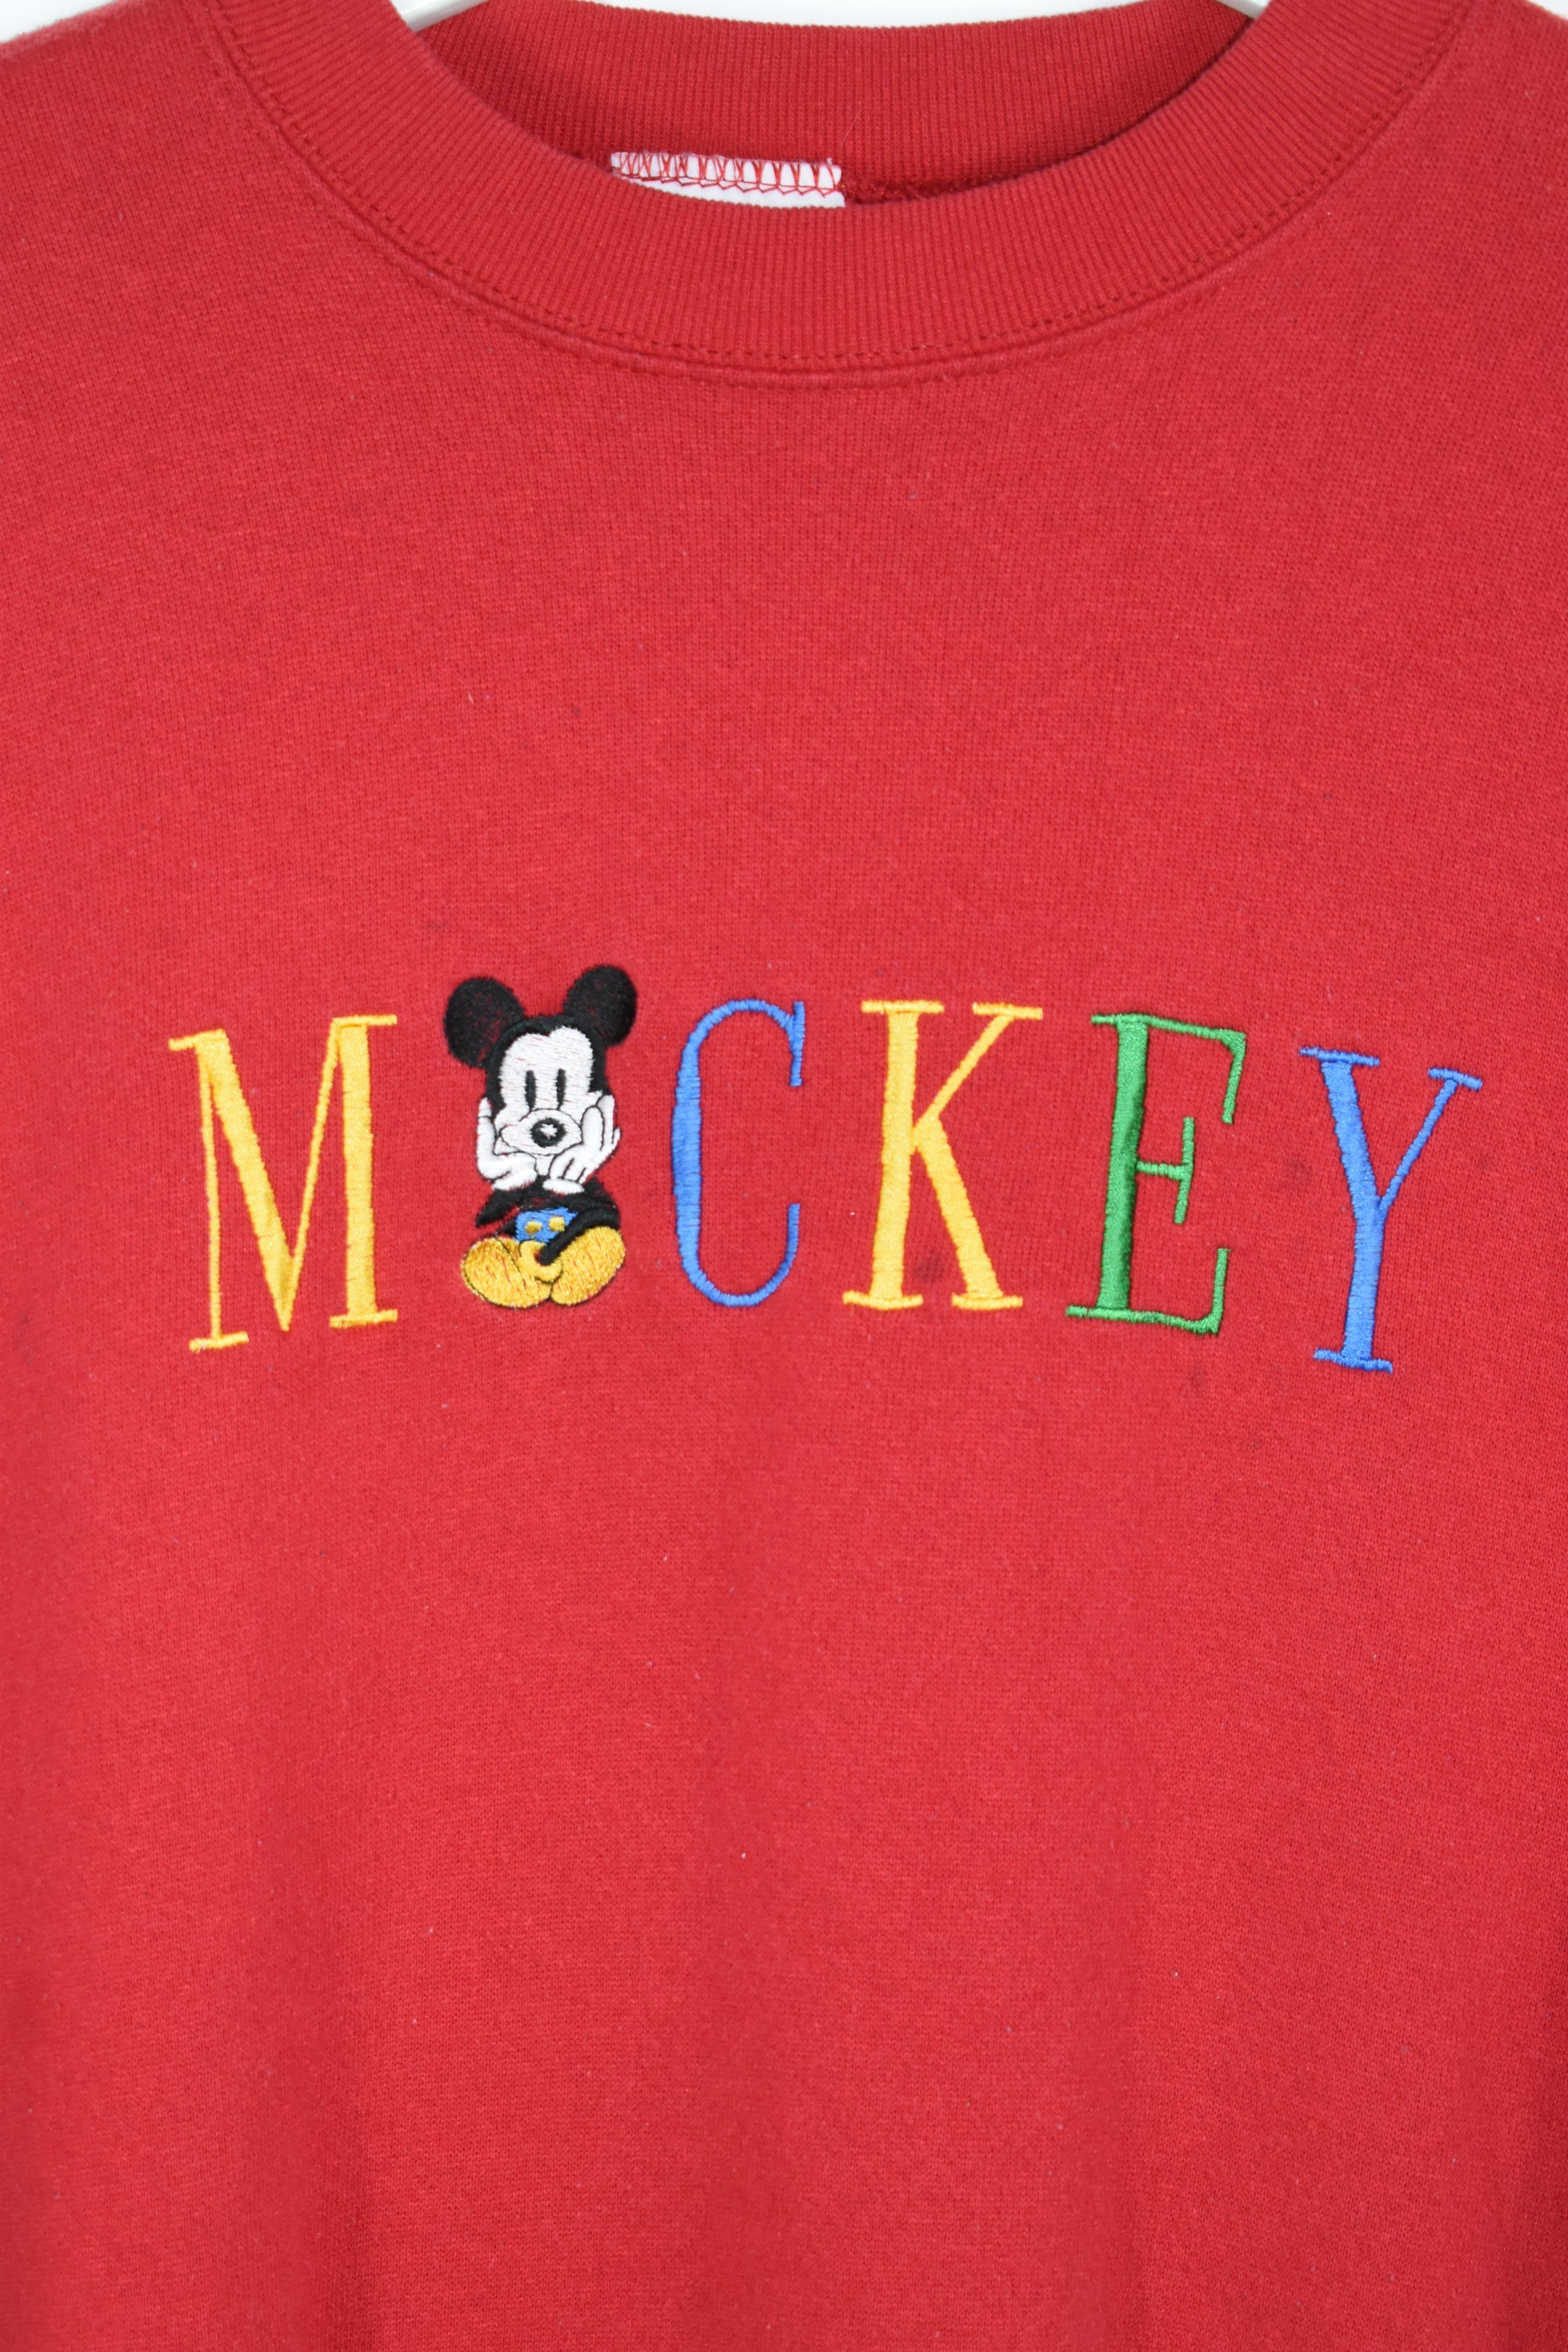 Vintage Disney Red Embroidery Mickey Mouse Sweatshirt Medium / Large